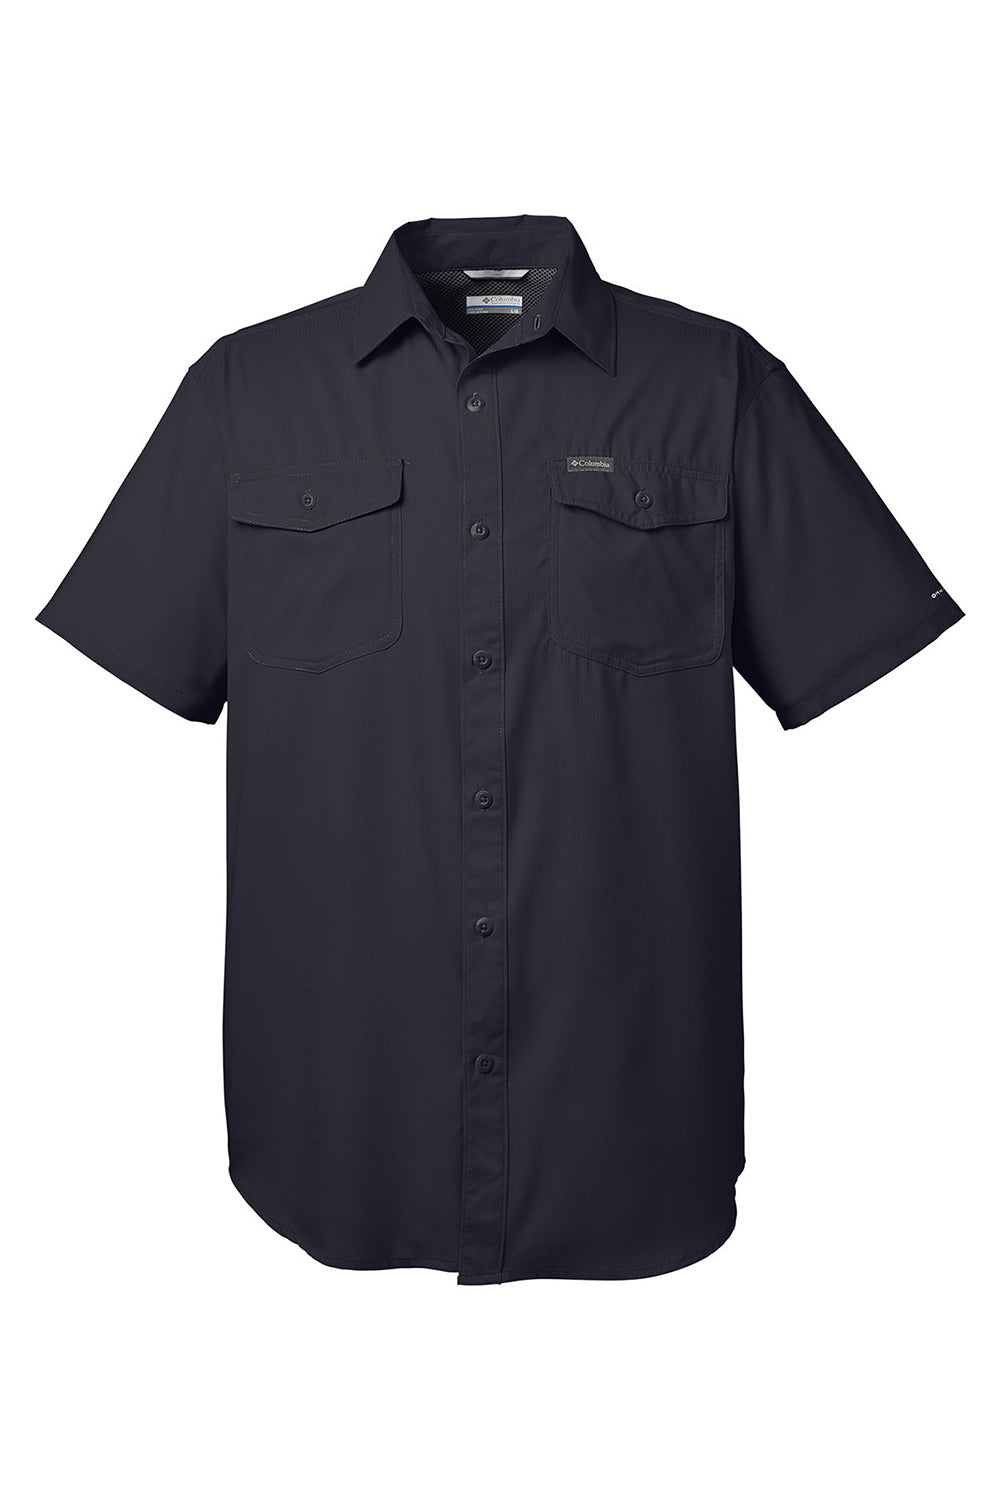 Columbia 1577761 Mens Utilizer II Short Sleeve Button Down Shirt Black Flat Front